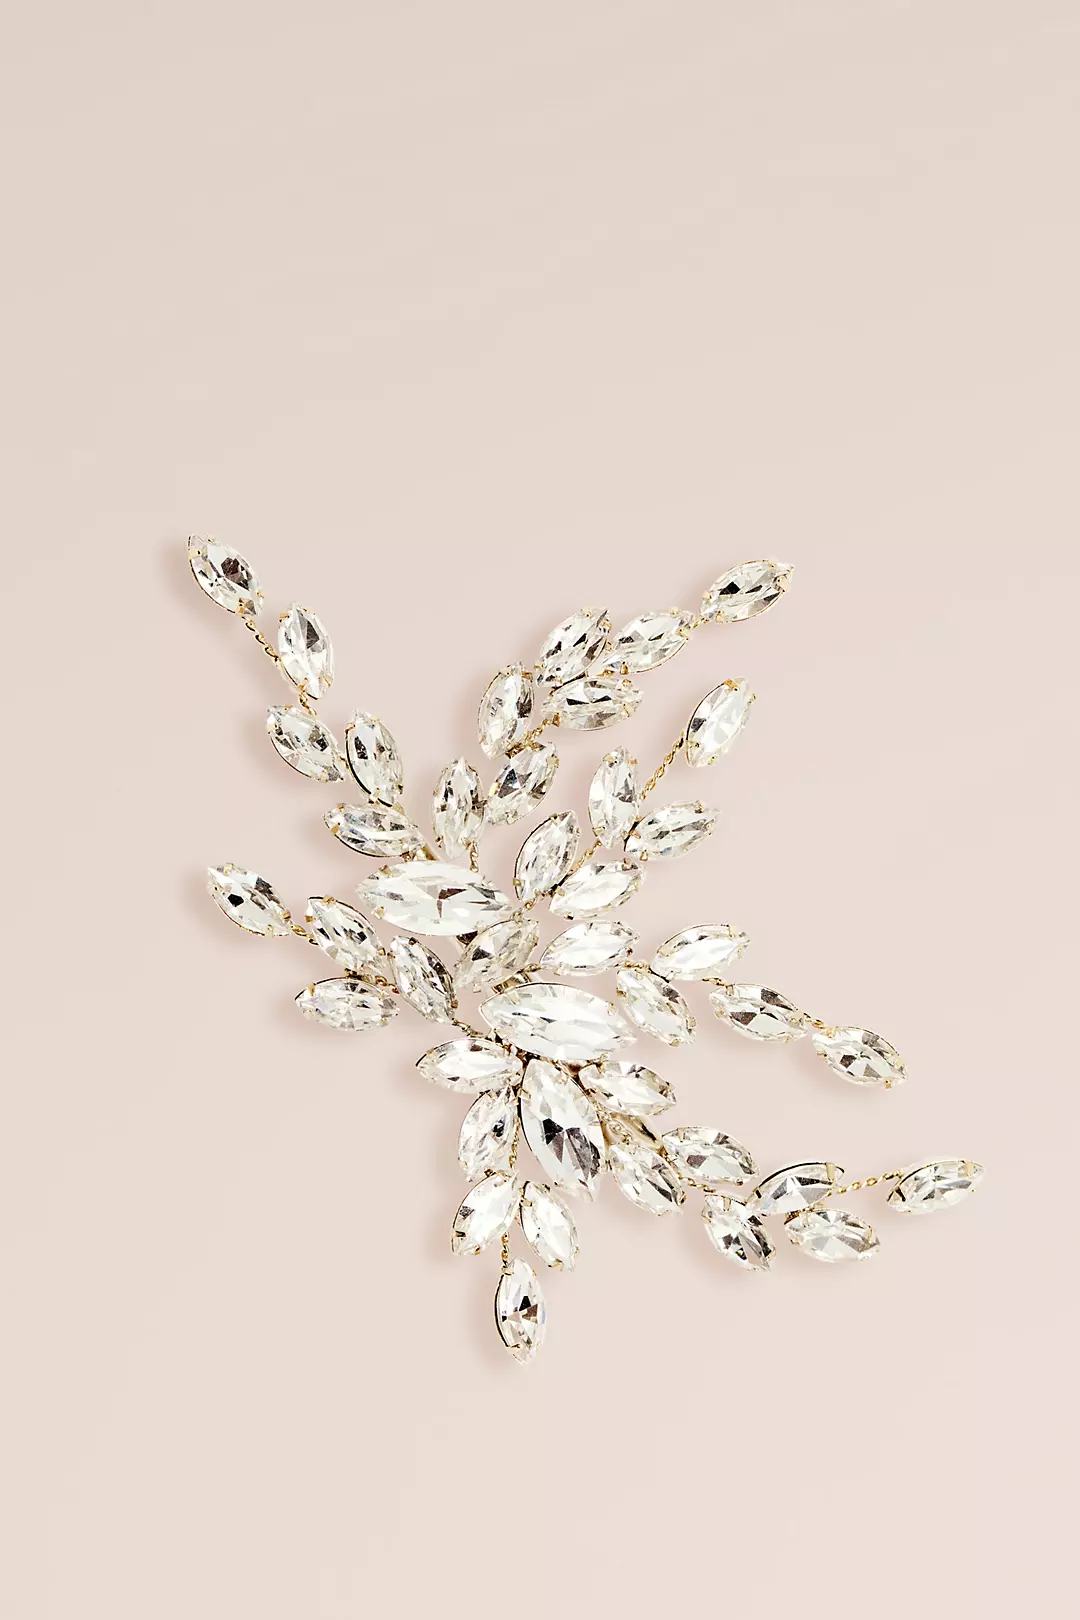 Hand-Wired Swarovski Crystal Marquise Leaf Clip Image